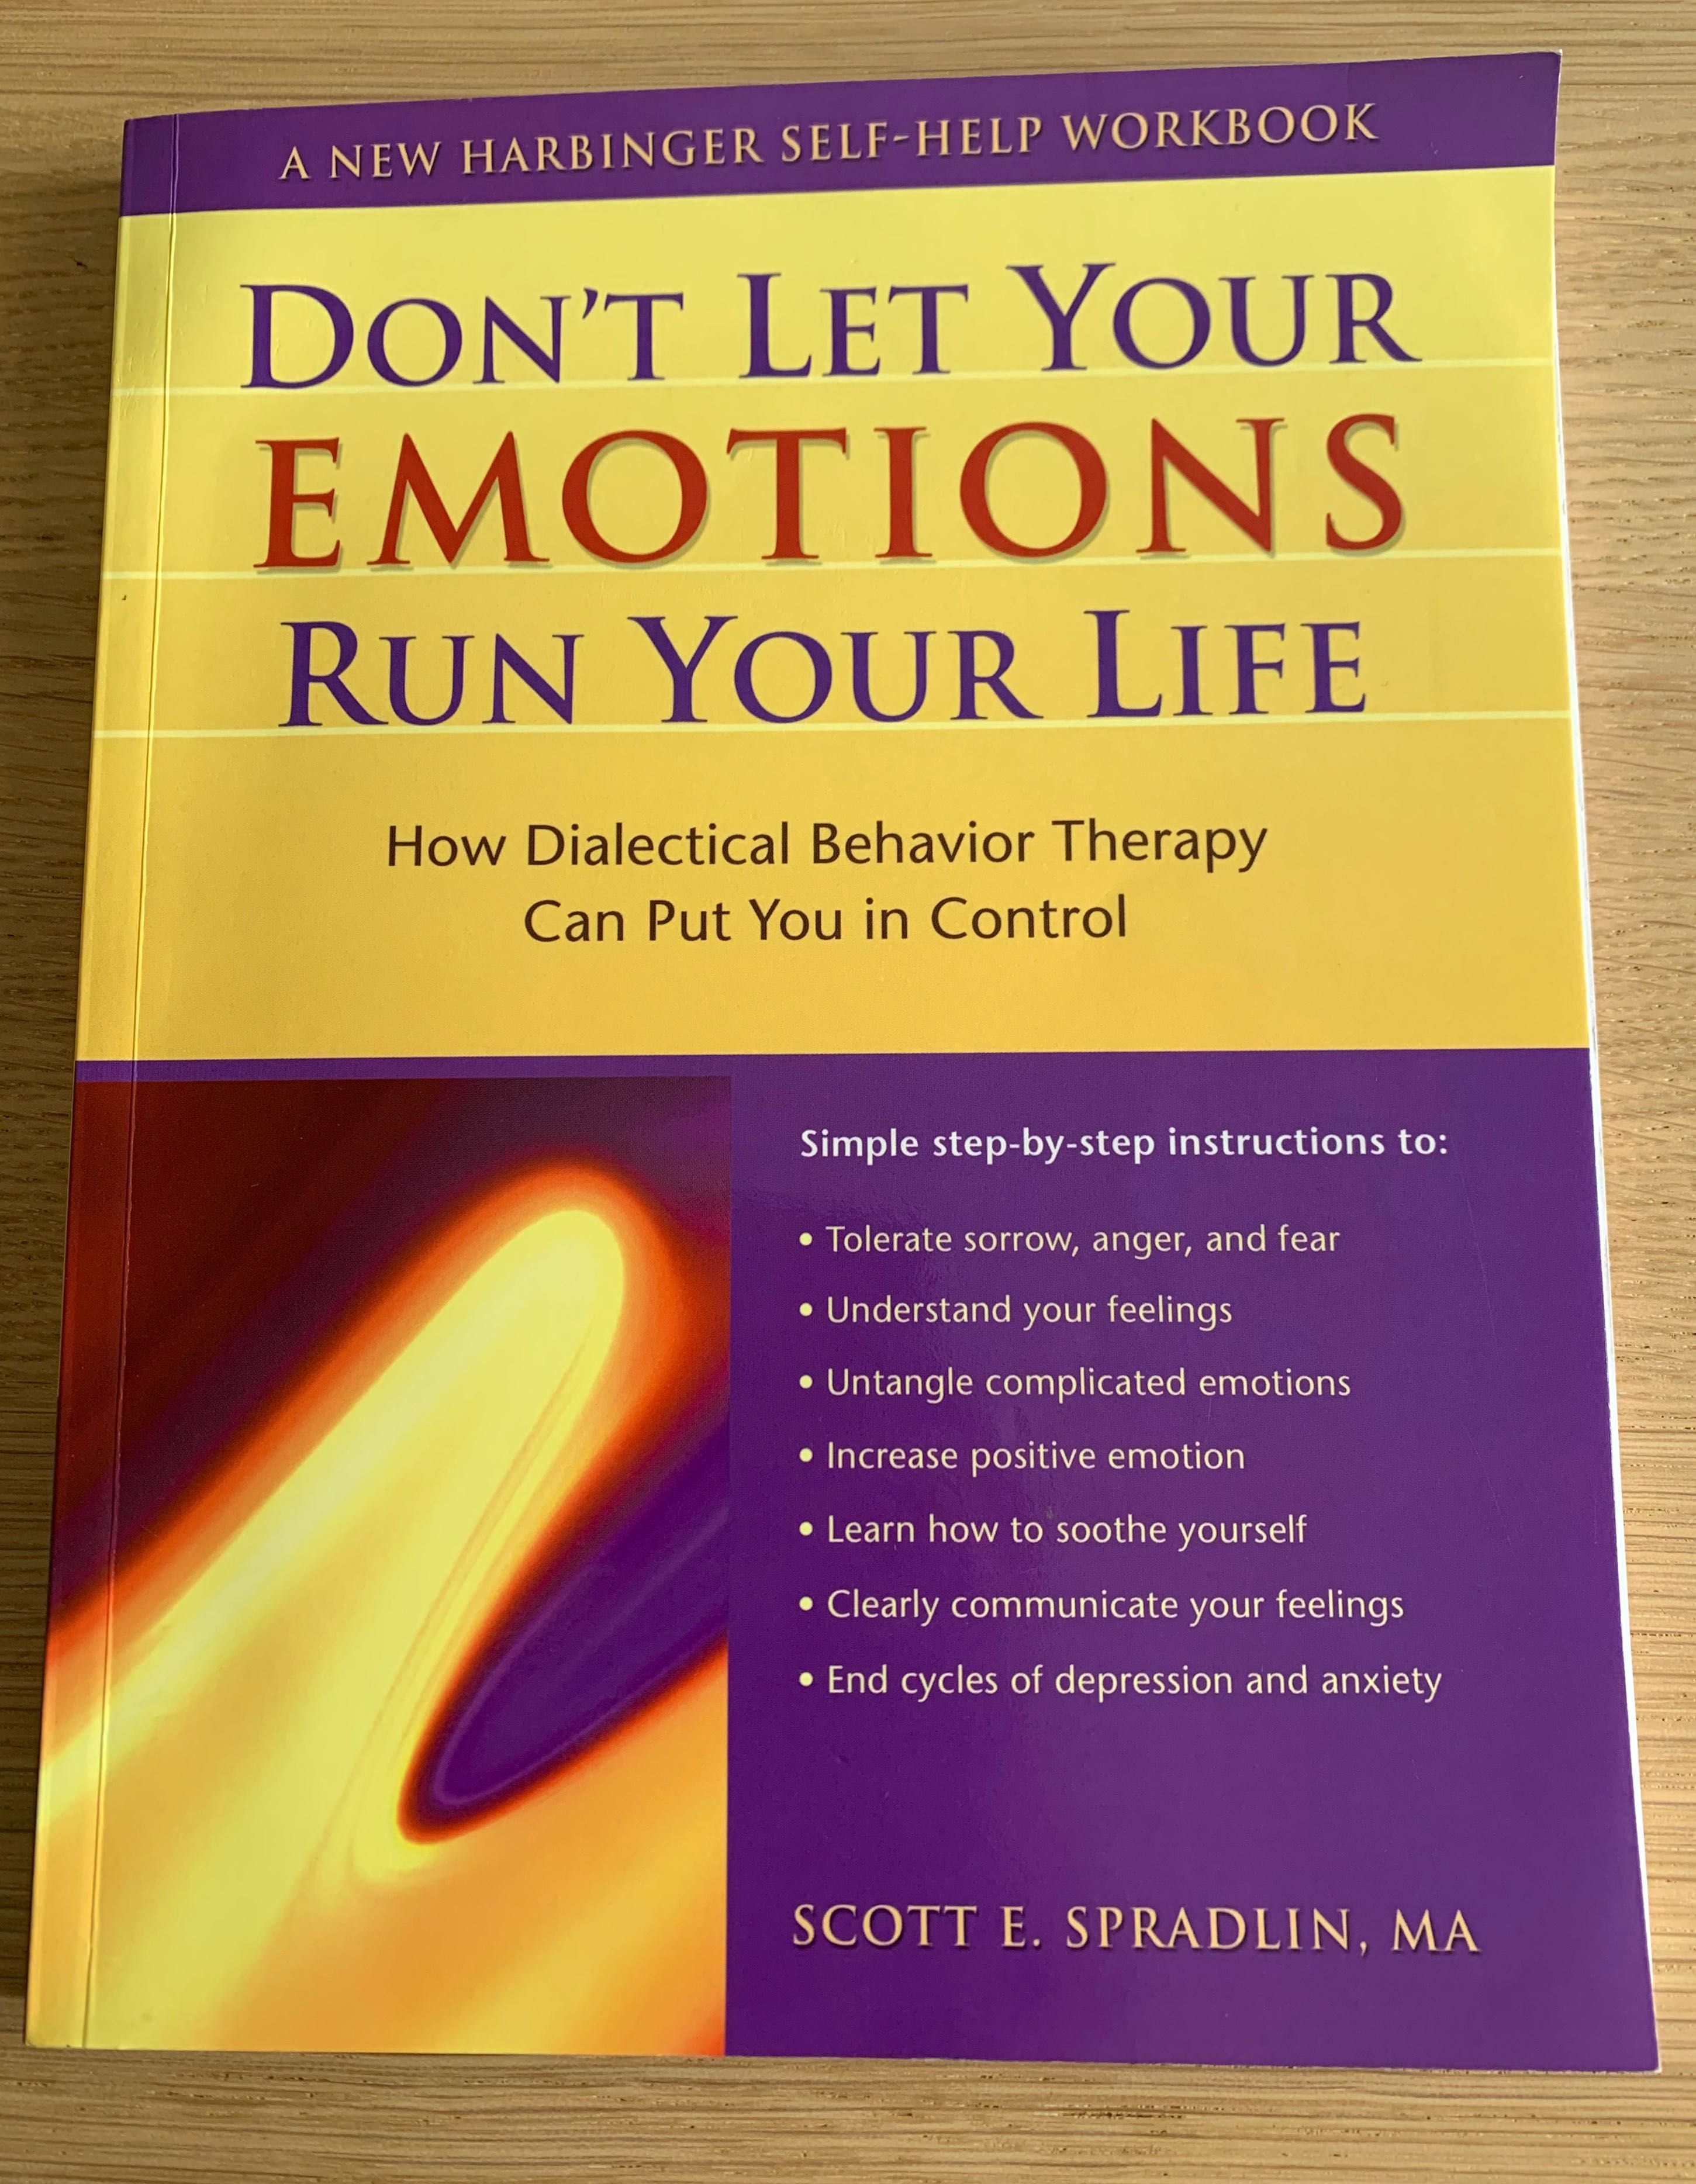 Livro "Don't Let Your Emotions Run Your Life", de Scott E. Spradlin